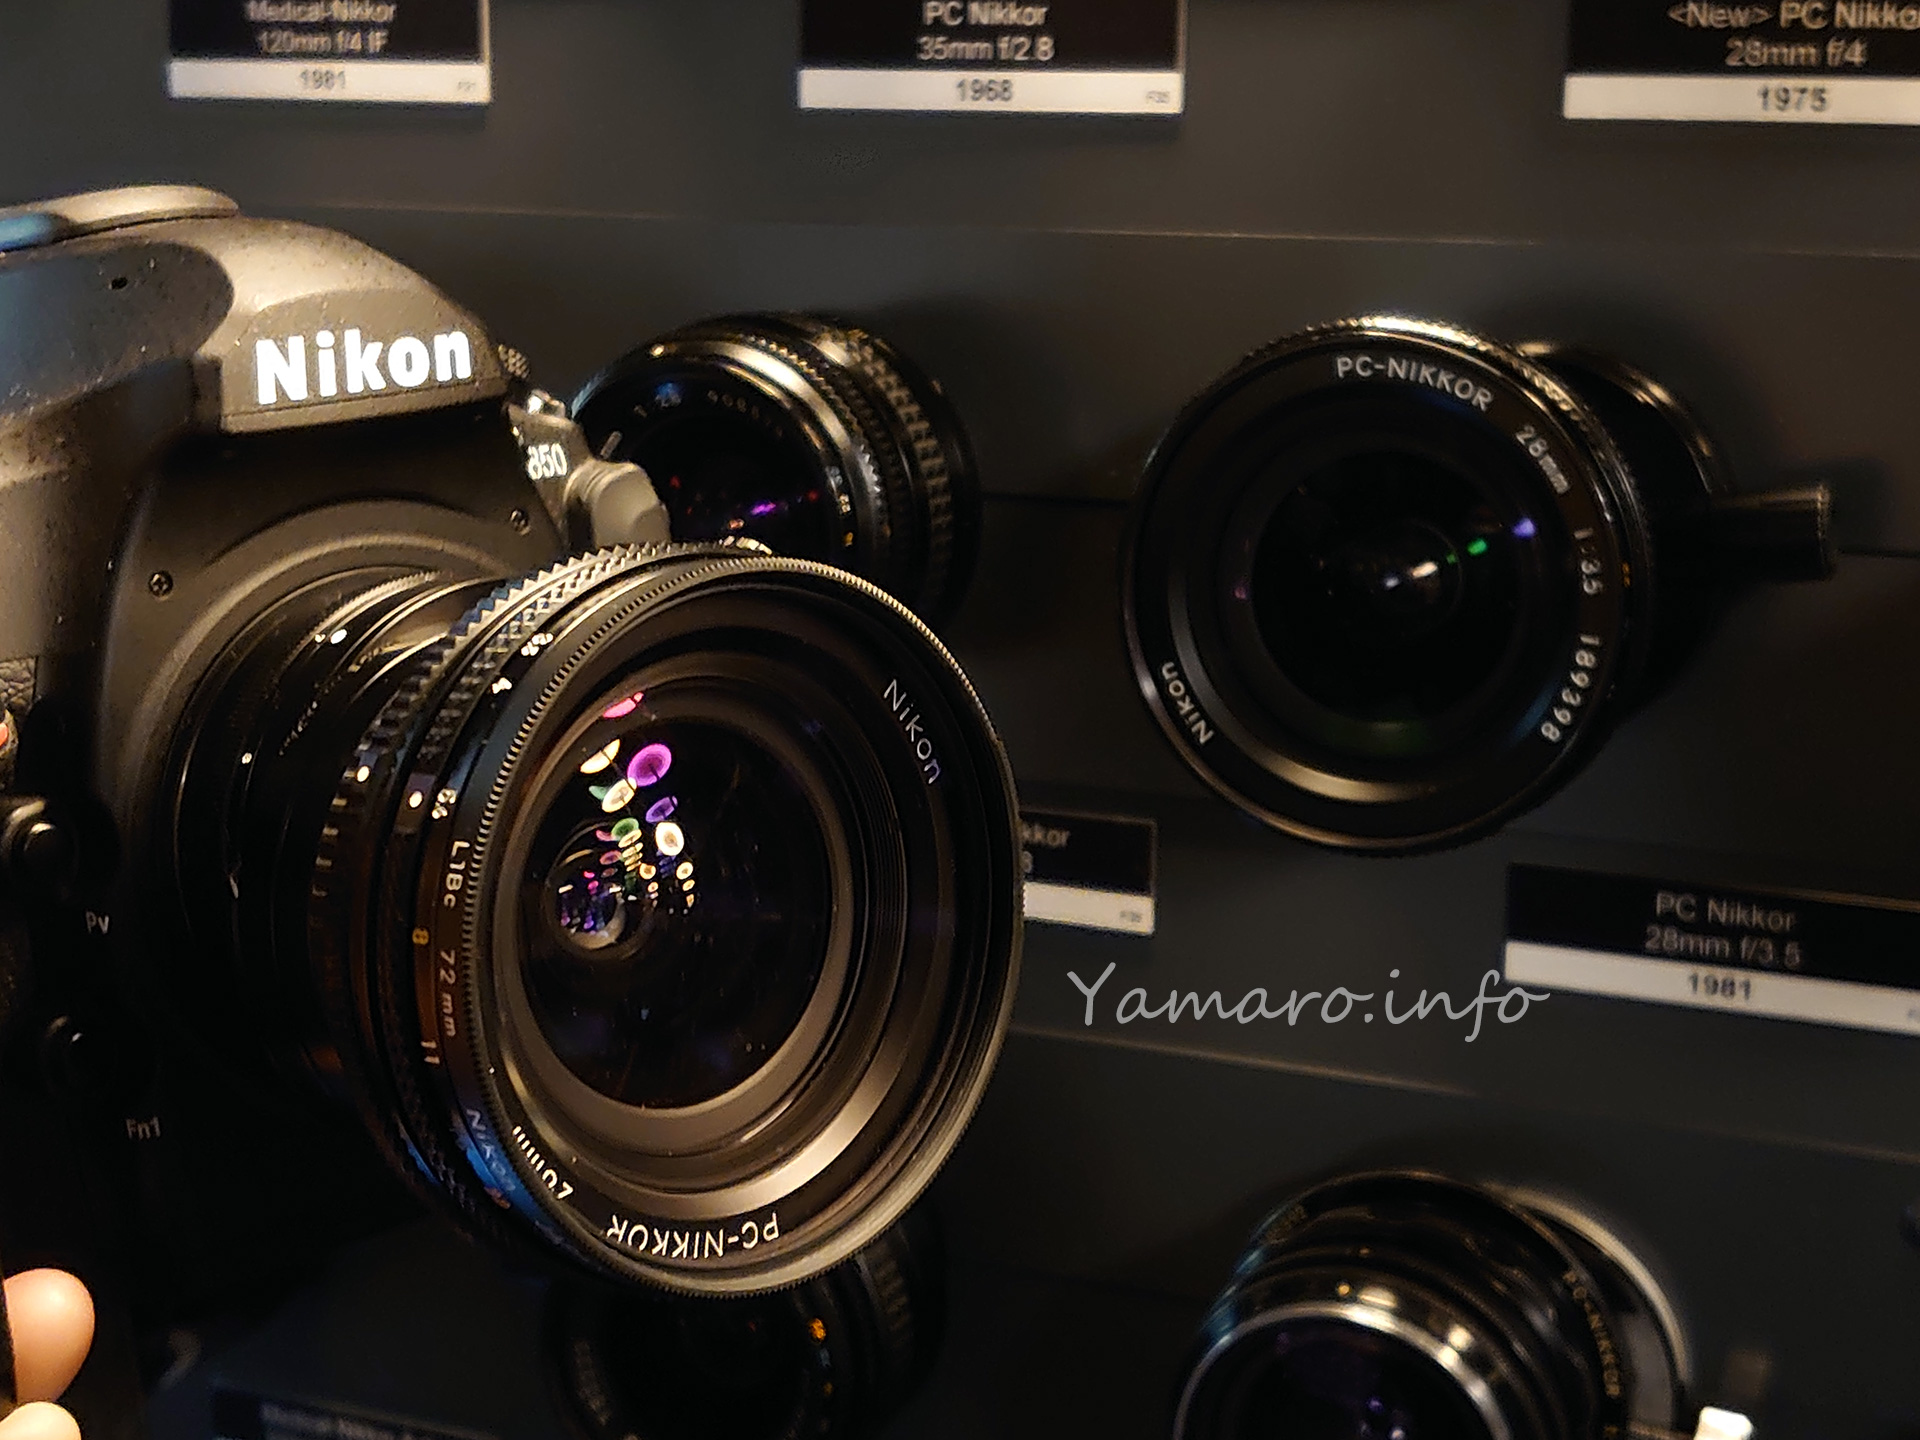 PC-Nikkor 28mm F3.5で撮るニコンミュージアム - Blog@yamaro.info